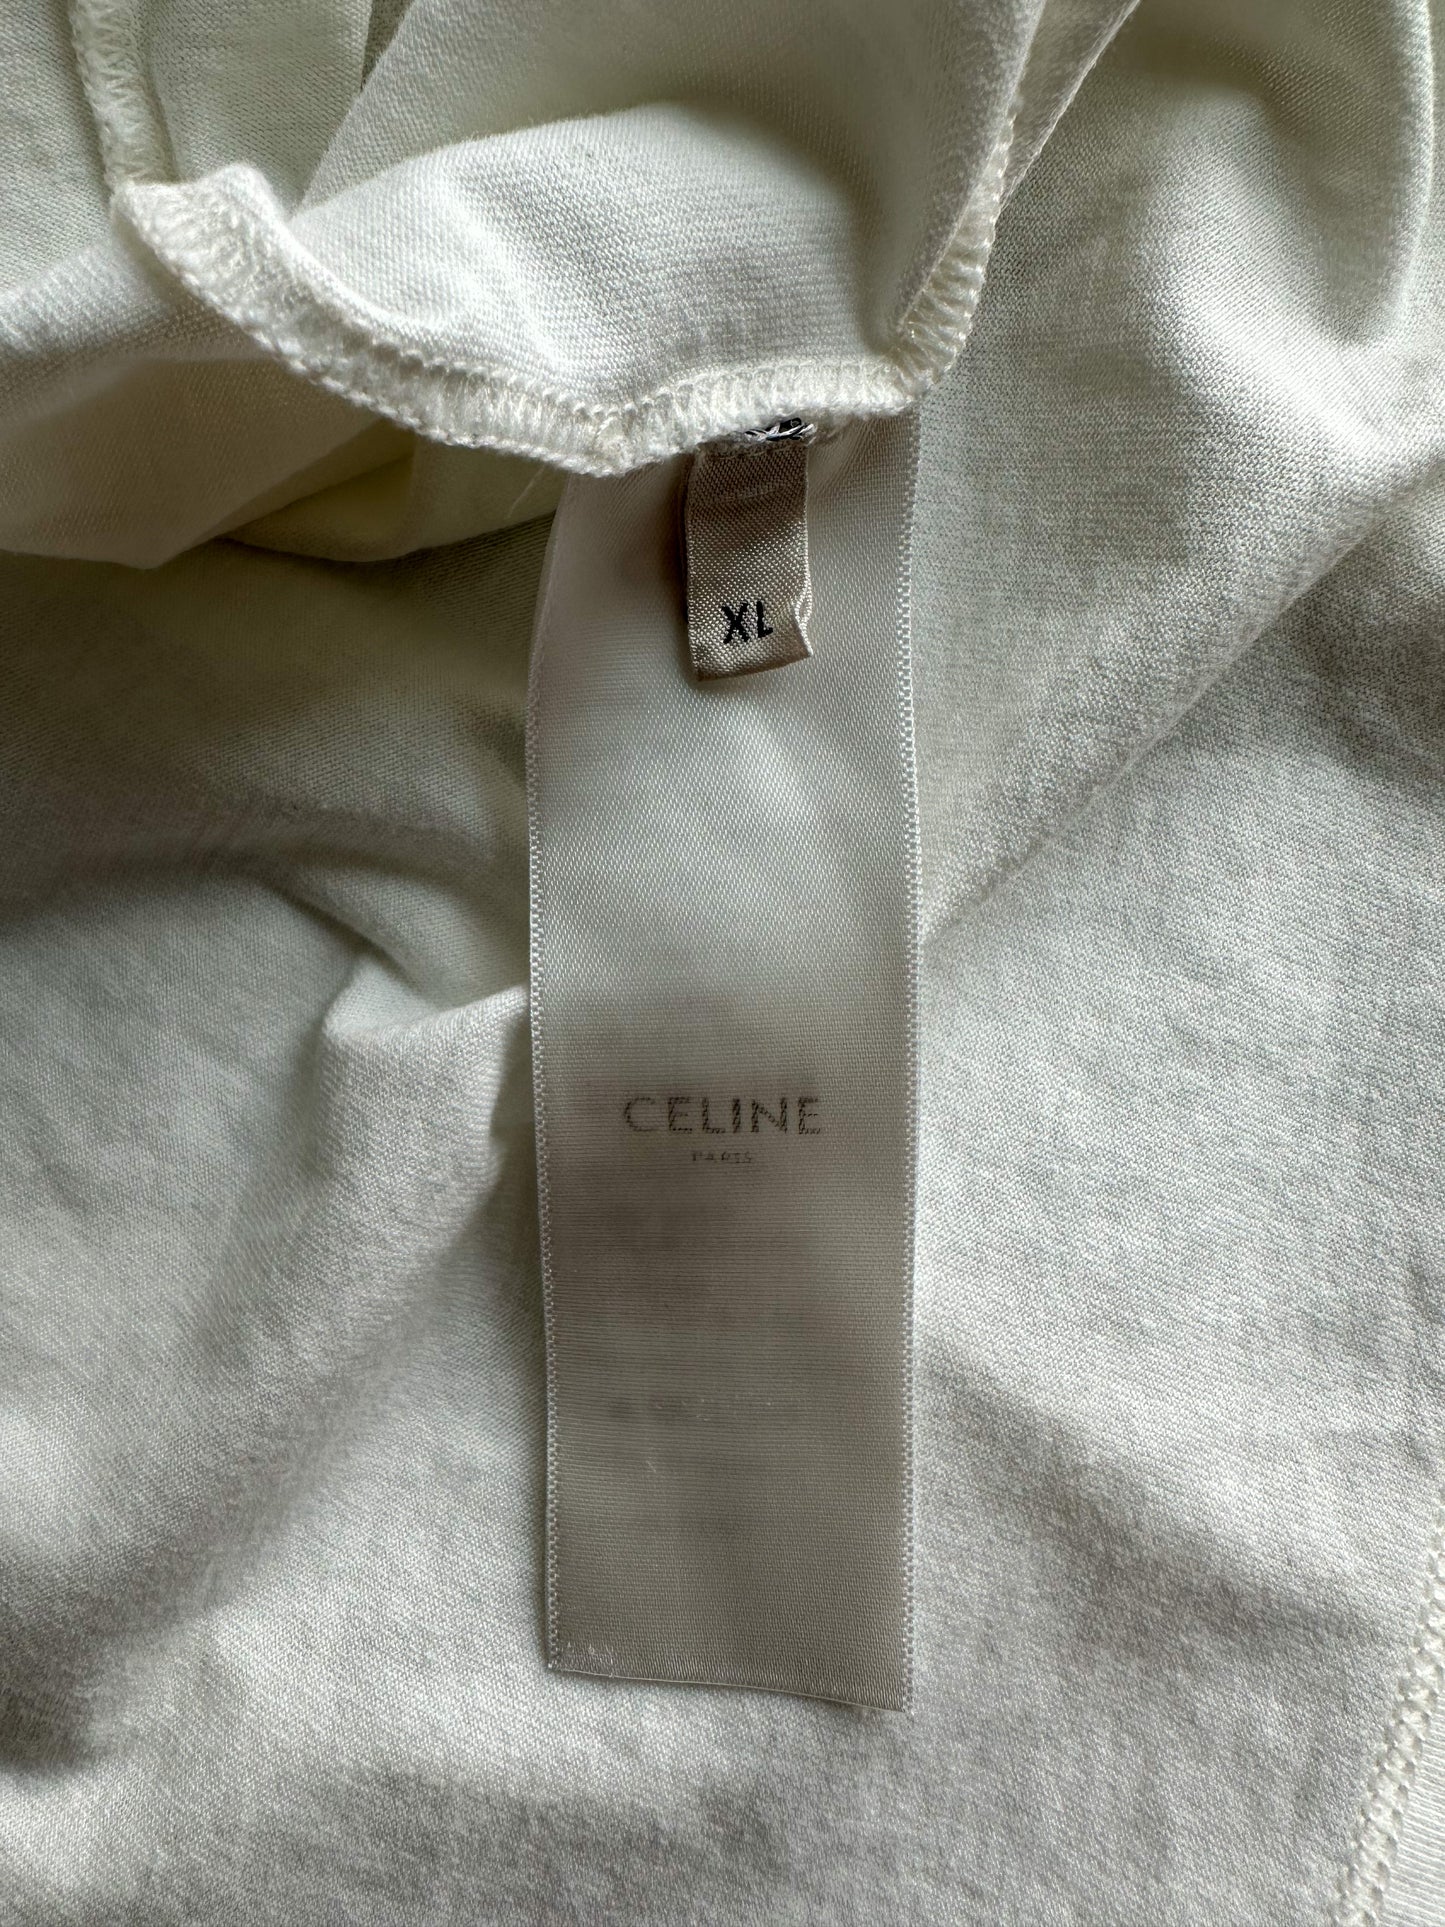 White Celine Paris t shirt Inspired Logo tShirt by CelebriTee, $14.49